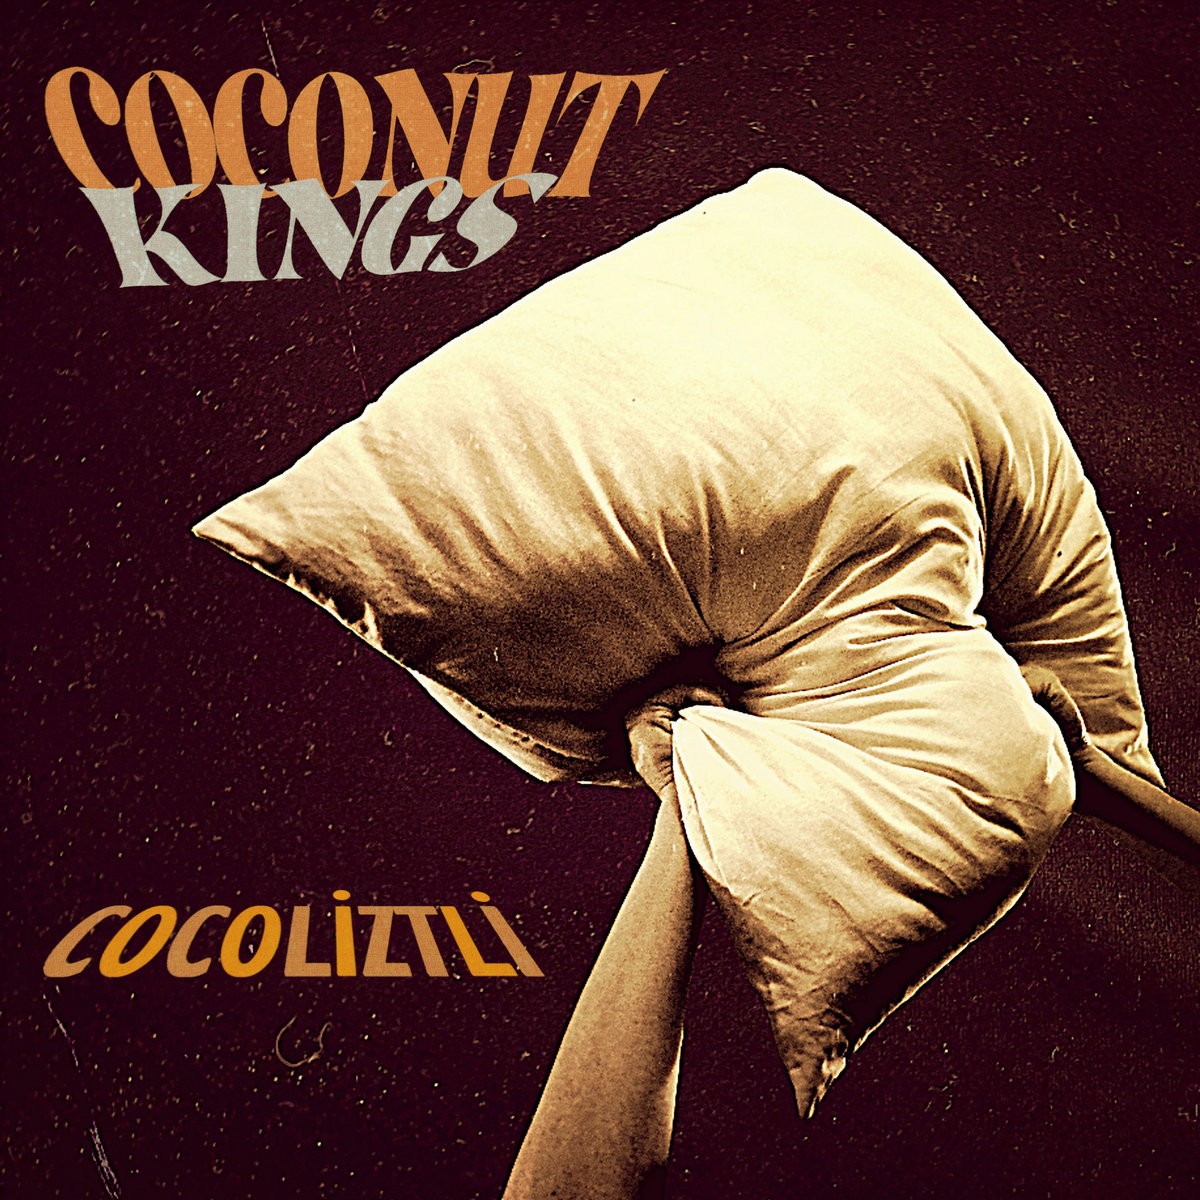 The Coconut Kings - Cocoliztli